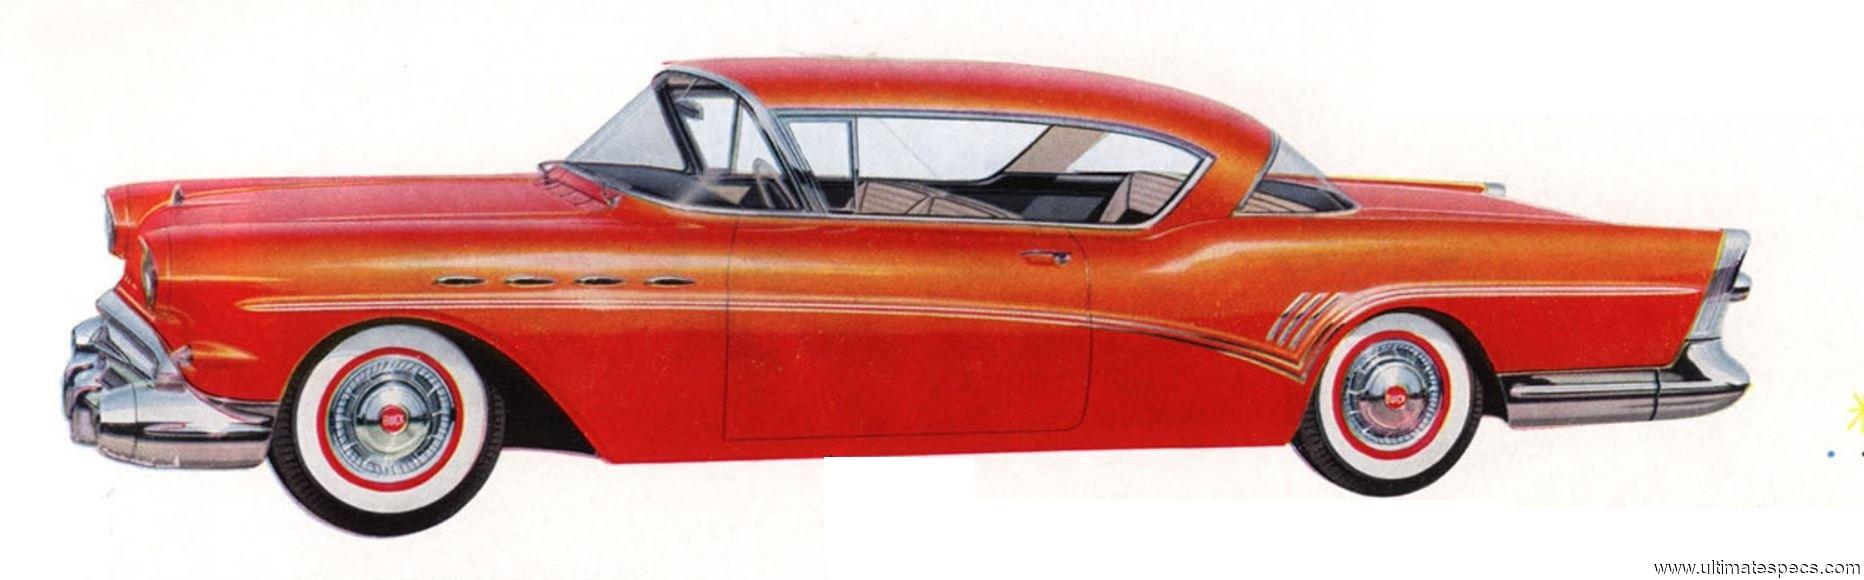 Buick Roadmaster Riviera Hardtop 1957